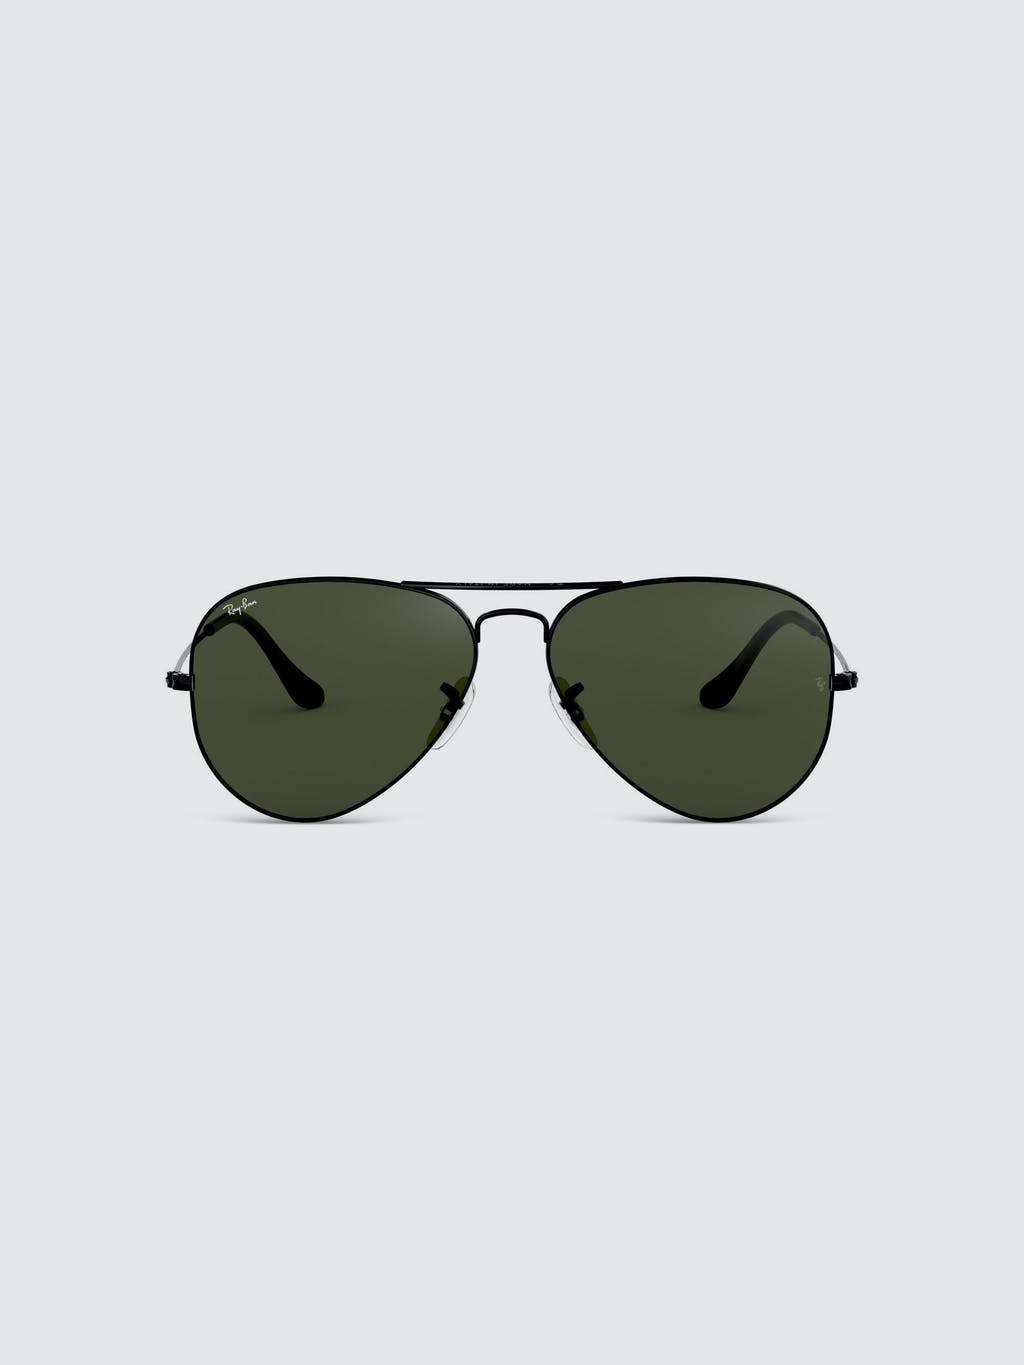 Org Aviator Sunglasses